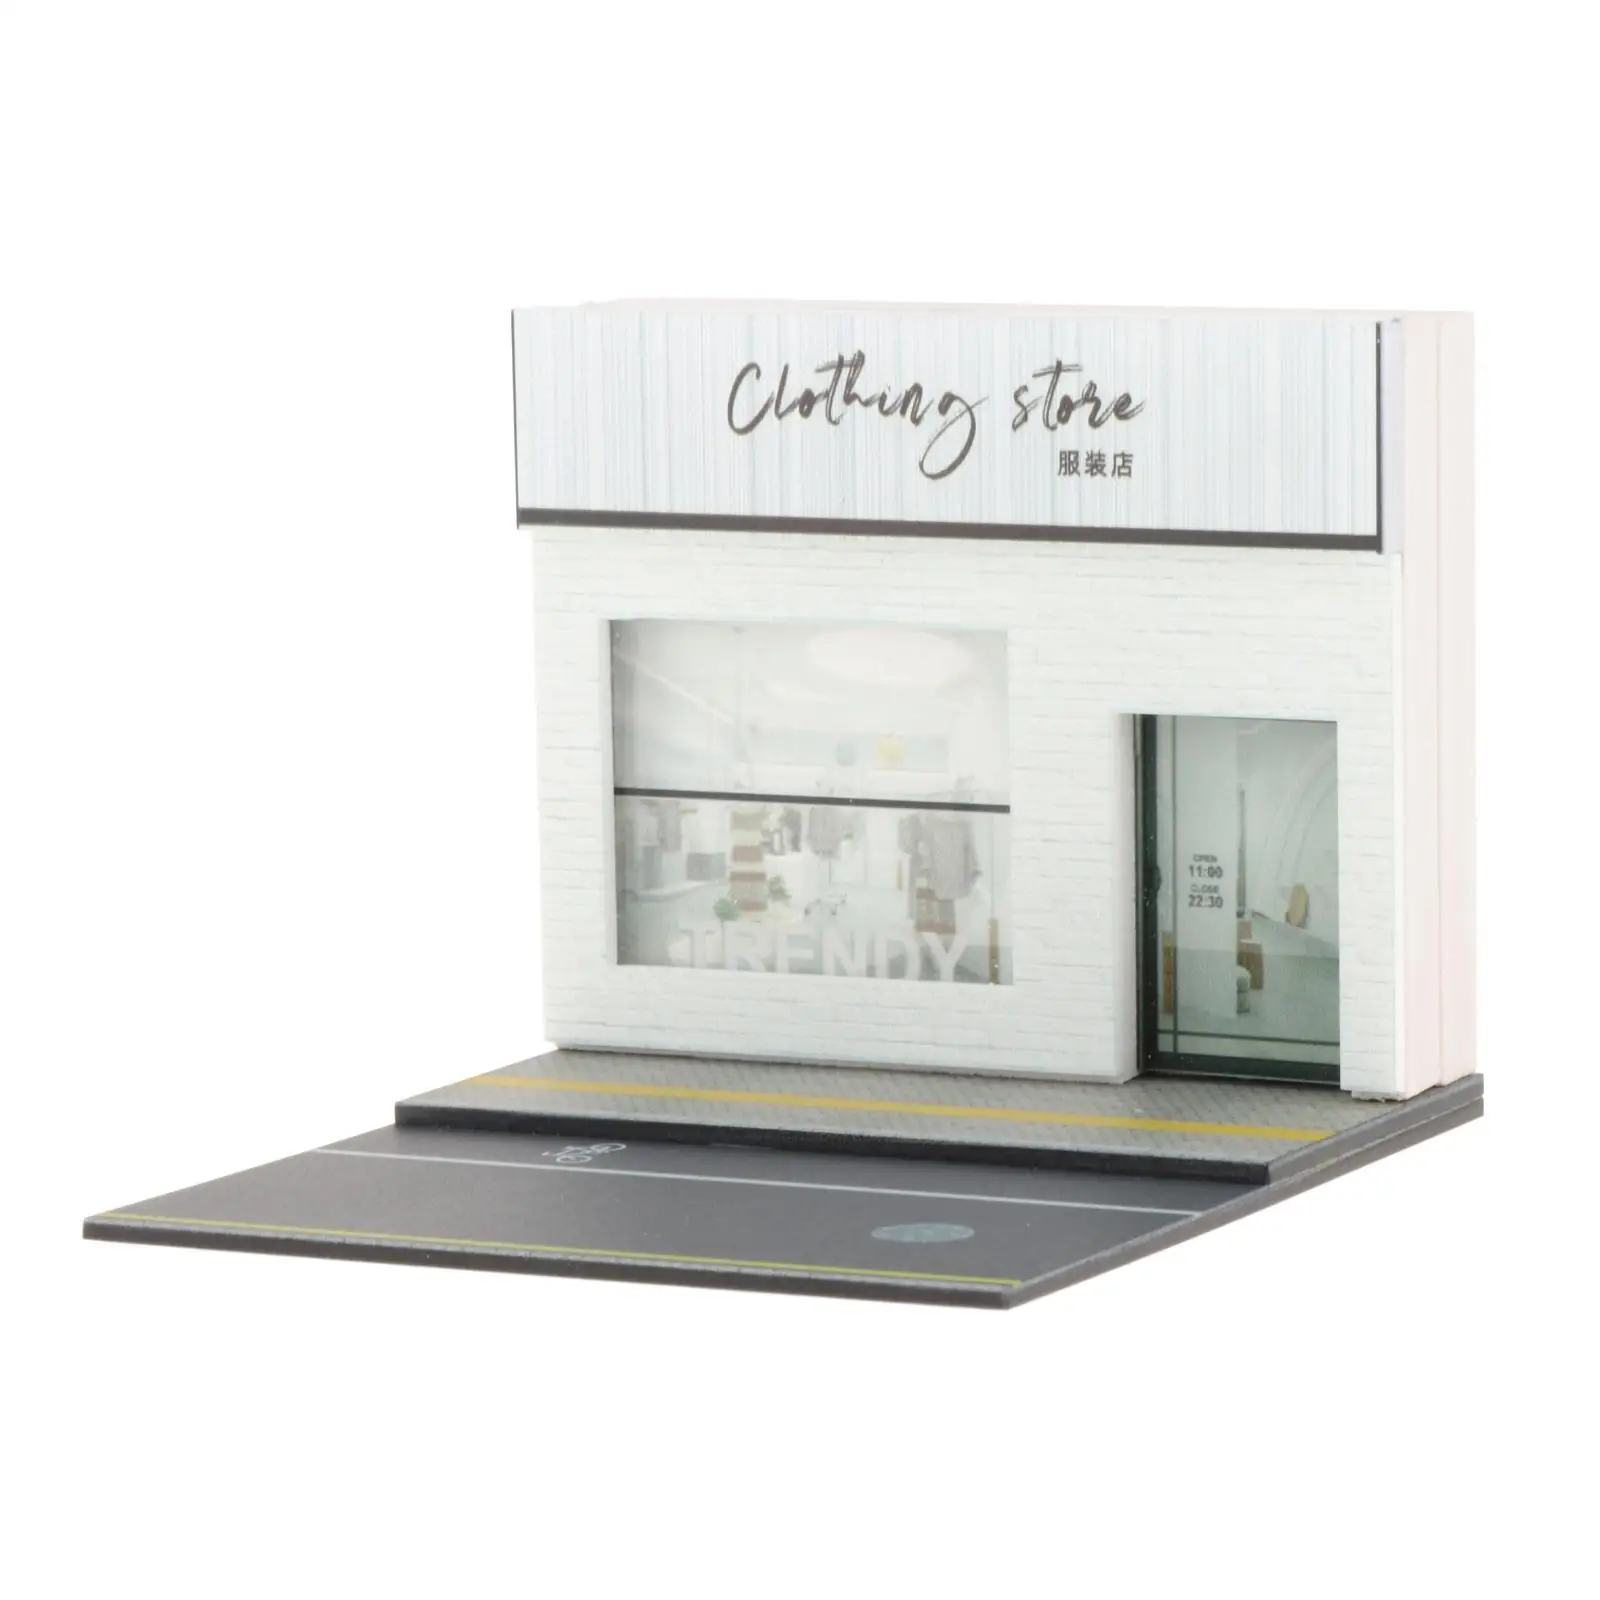 1/64 Shop Model Diorama Kits S Scale Scenery for Street Building Scene Props